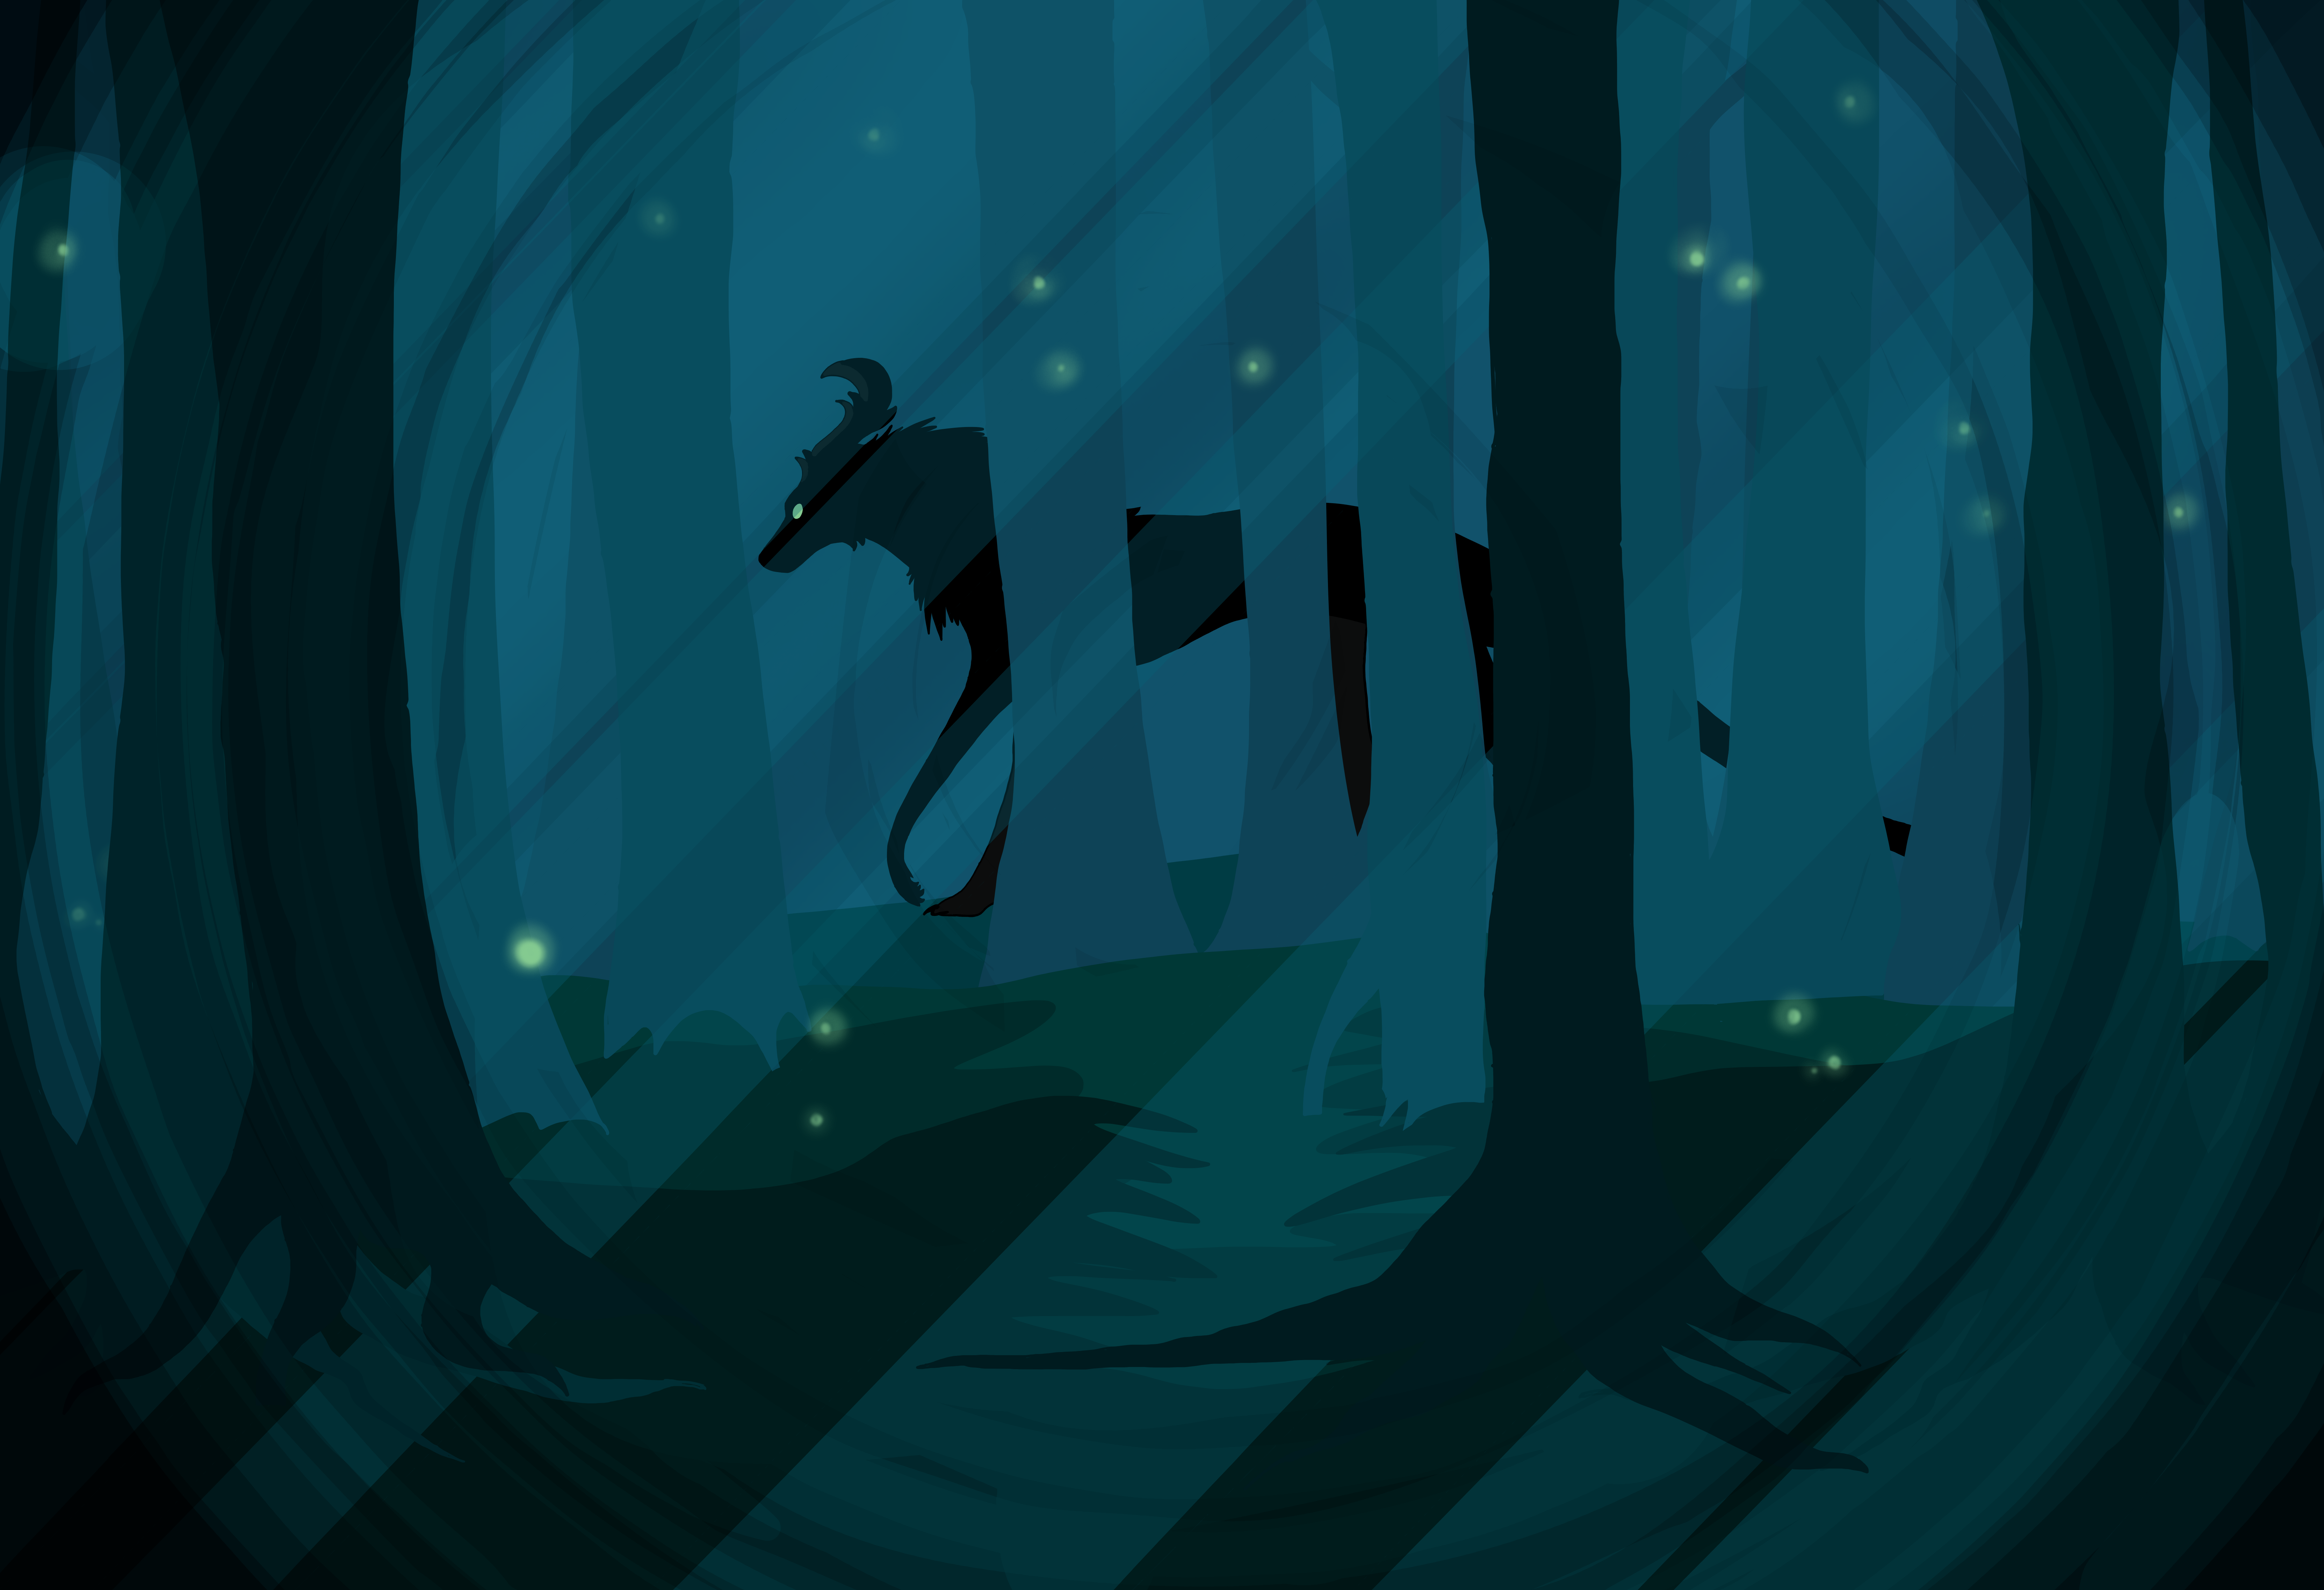 Creature in the Night - Digital Illustration